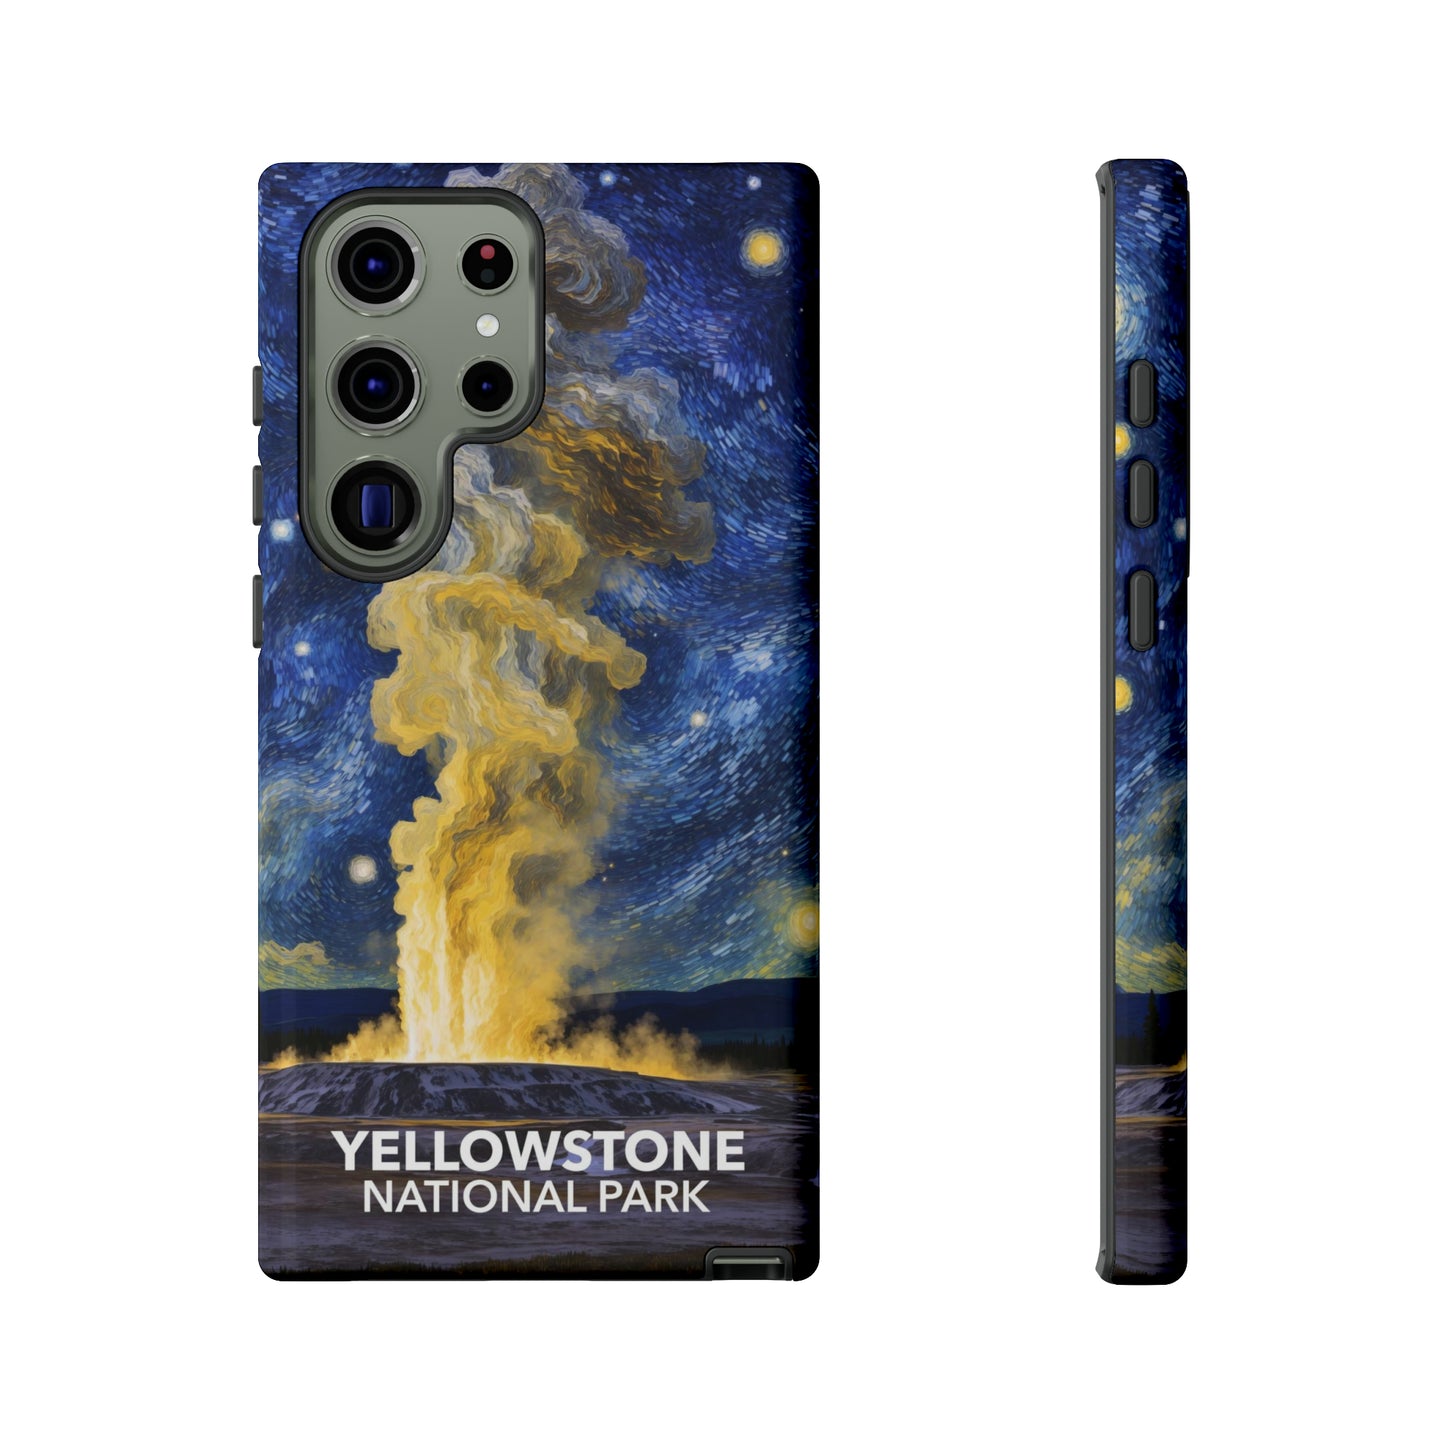 Yellowstone National Park Phone Case - Old Faithful Starry Night